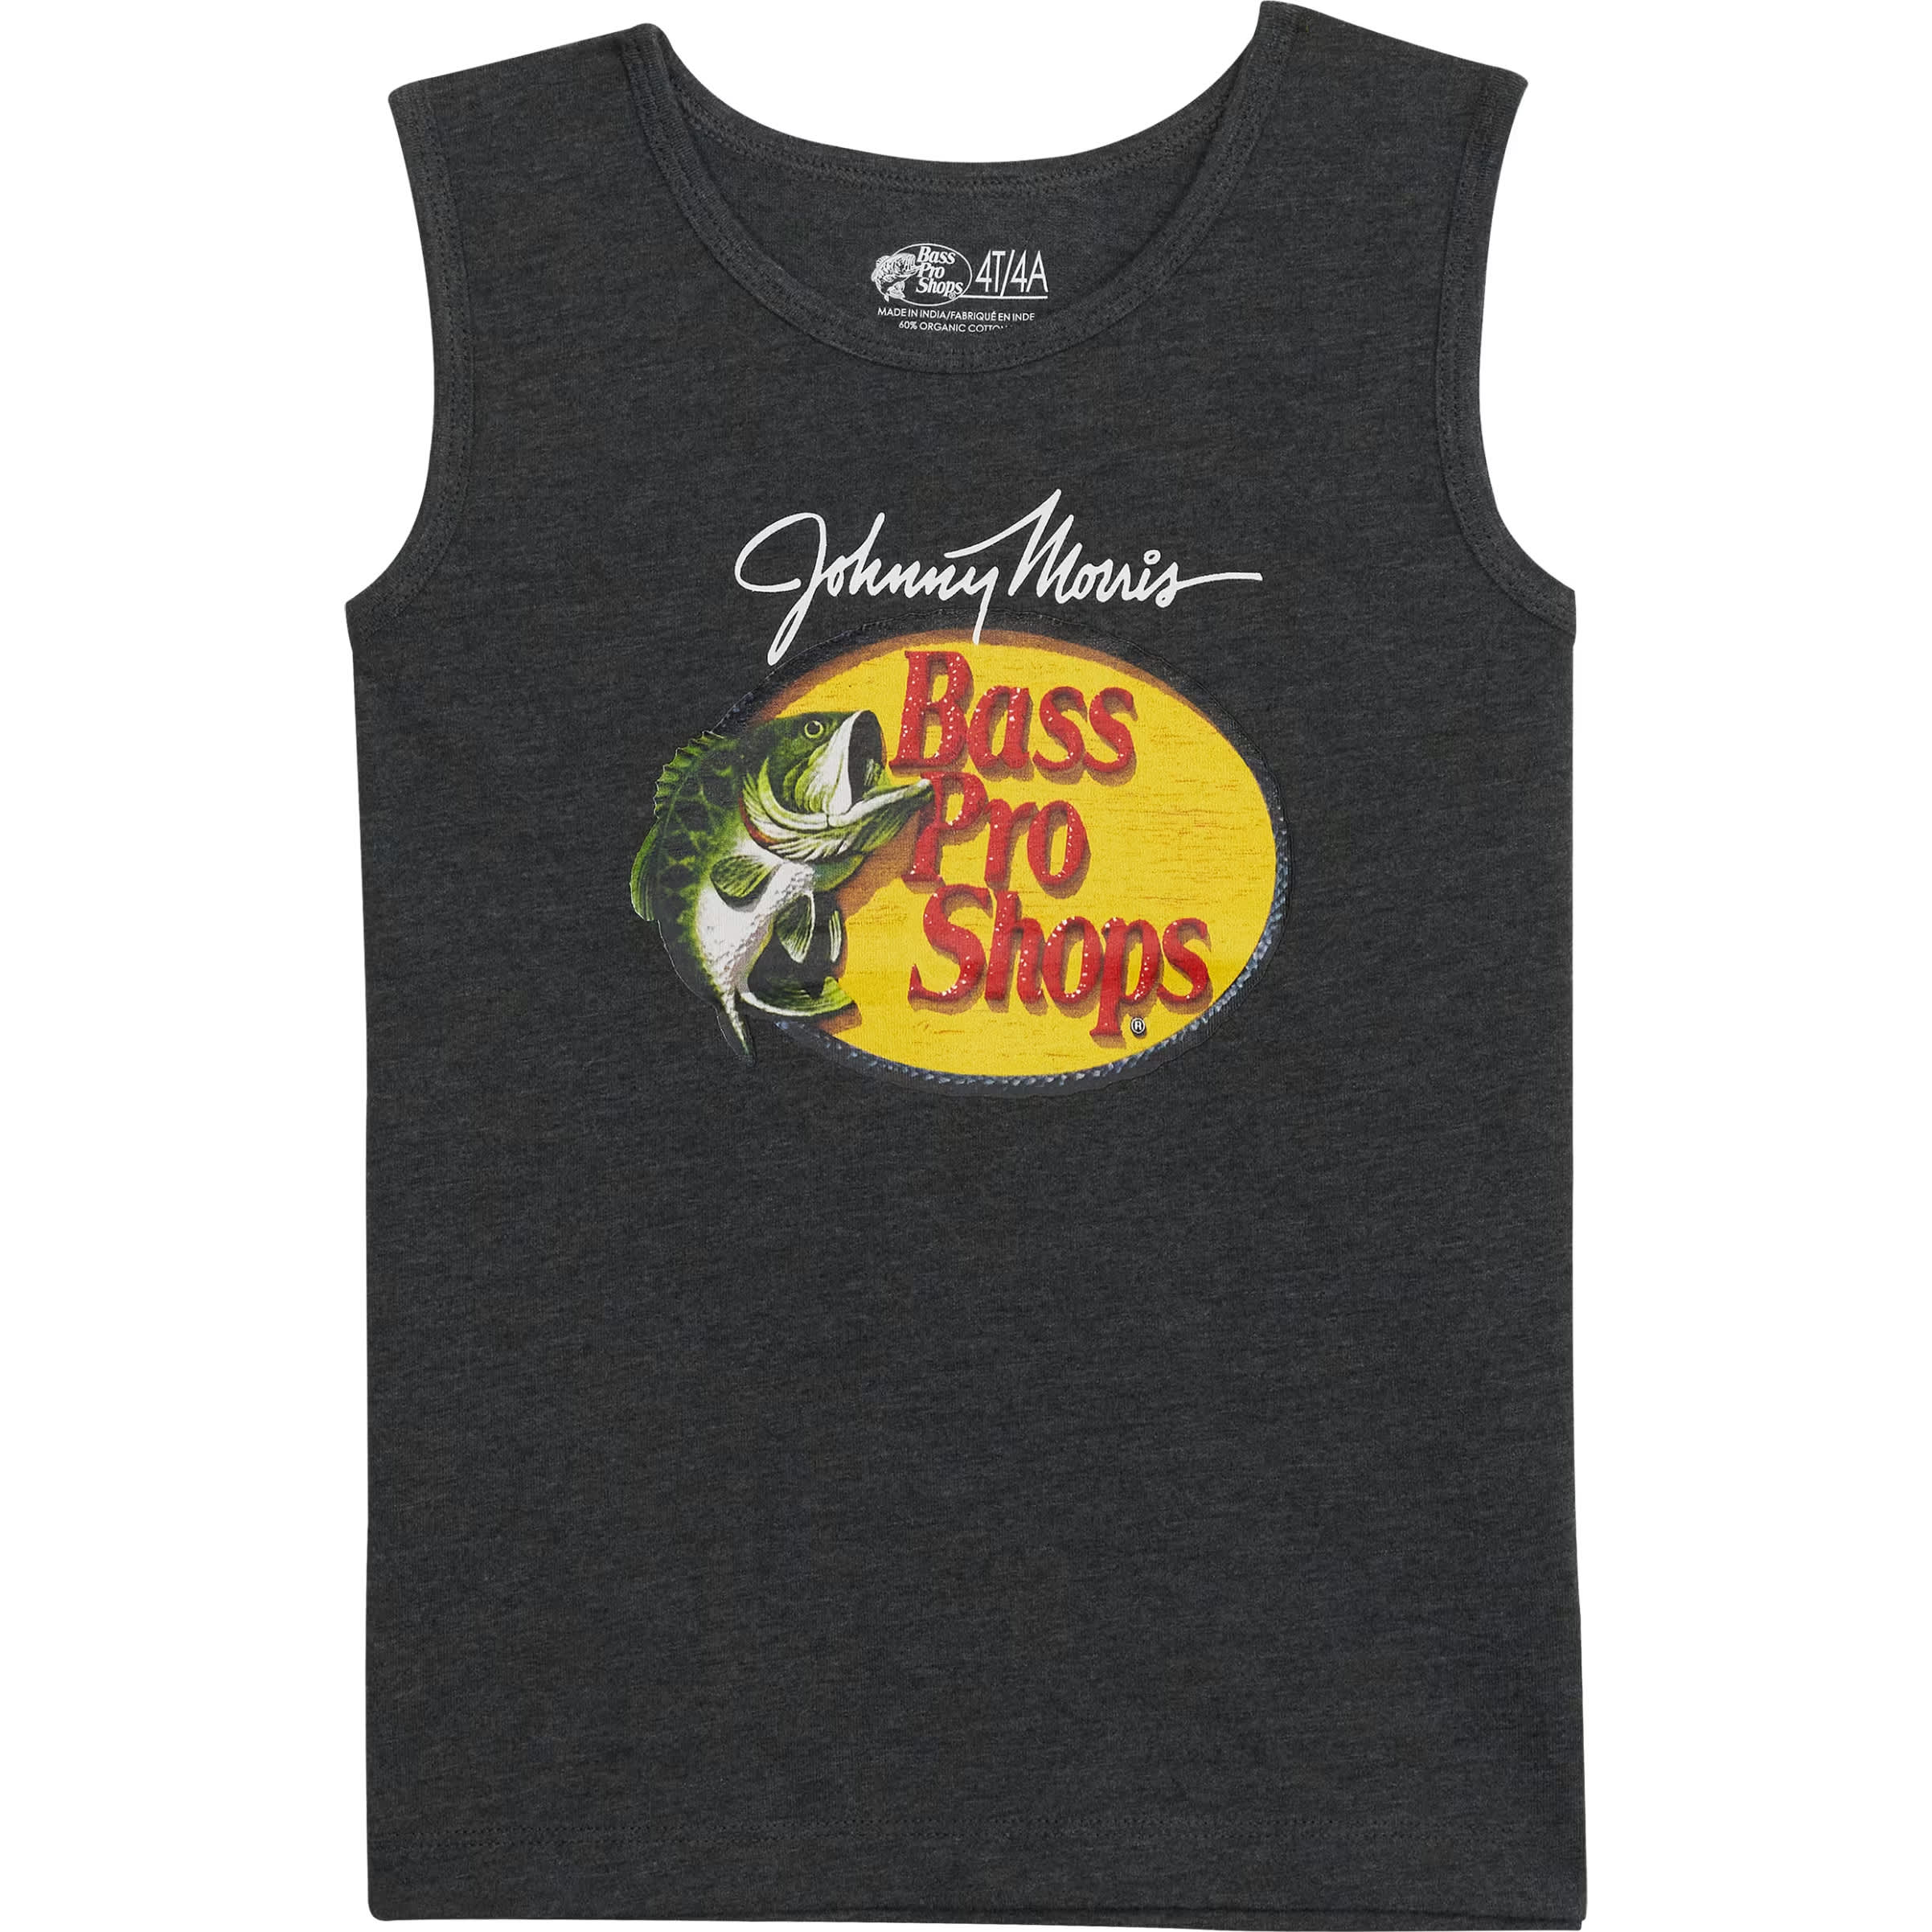 Bass Pro Shops® Boys’ Signature Logo Tank Top